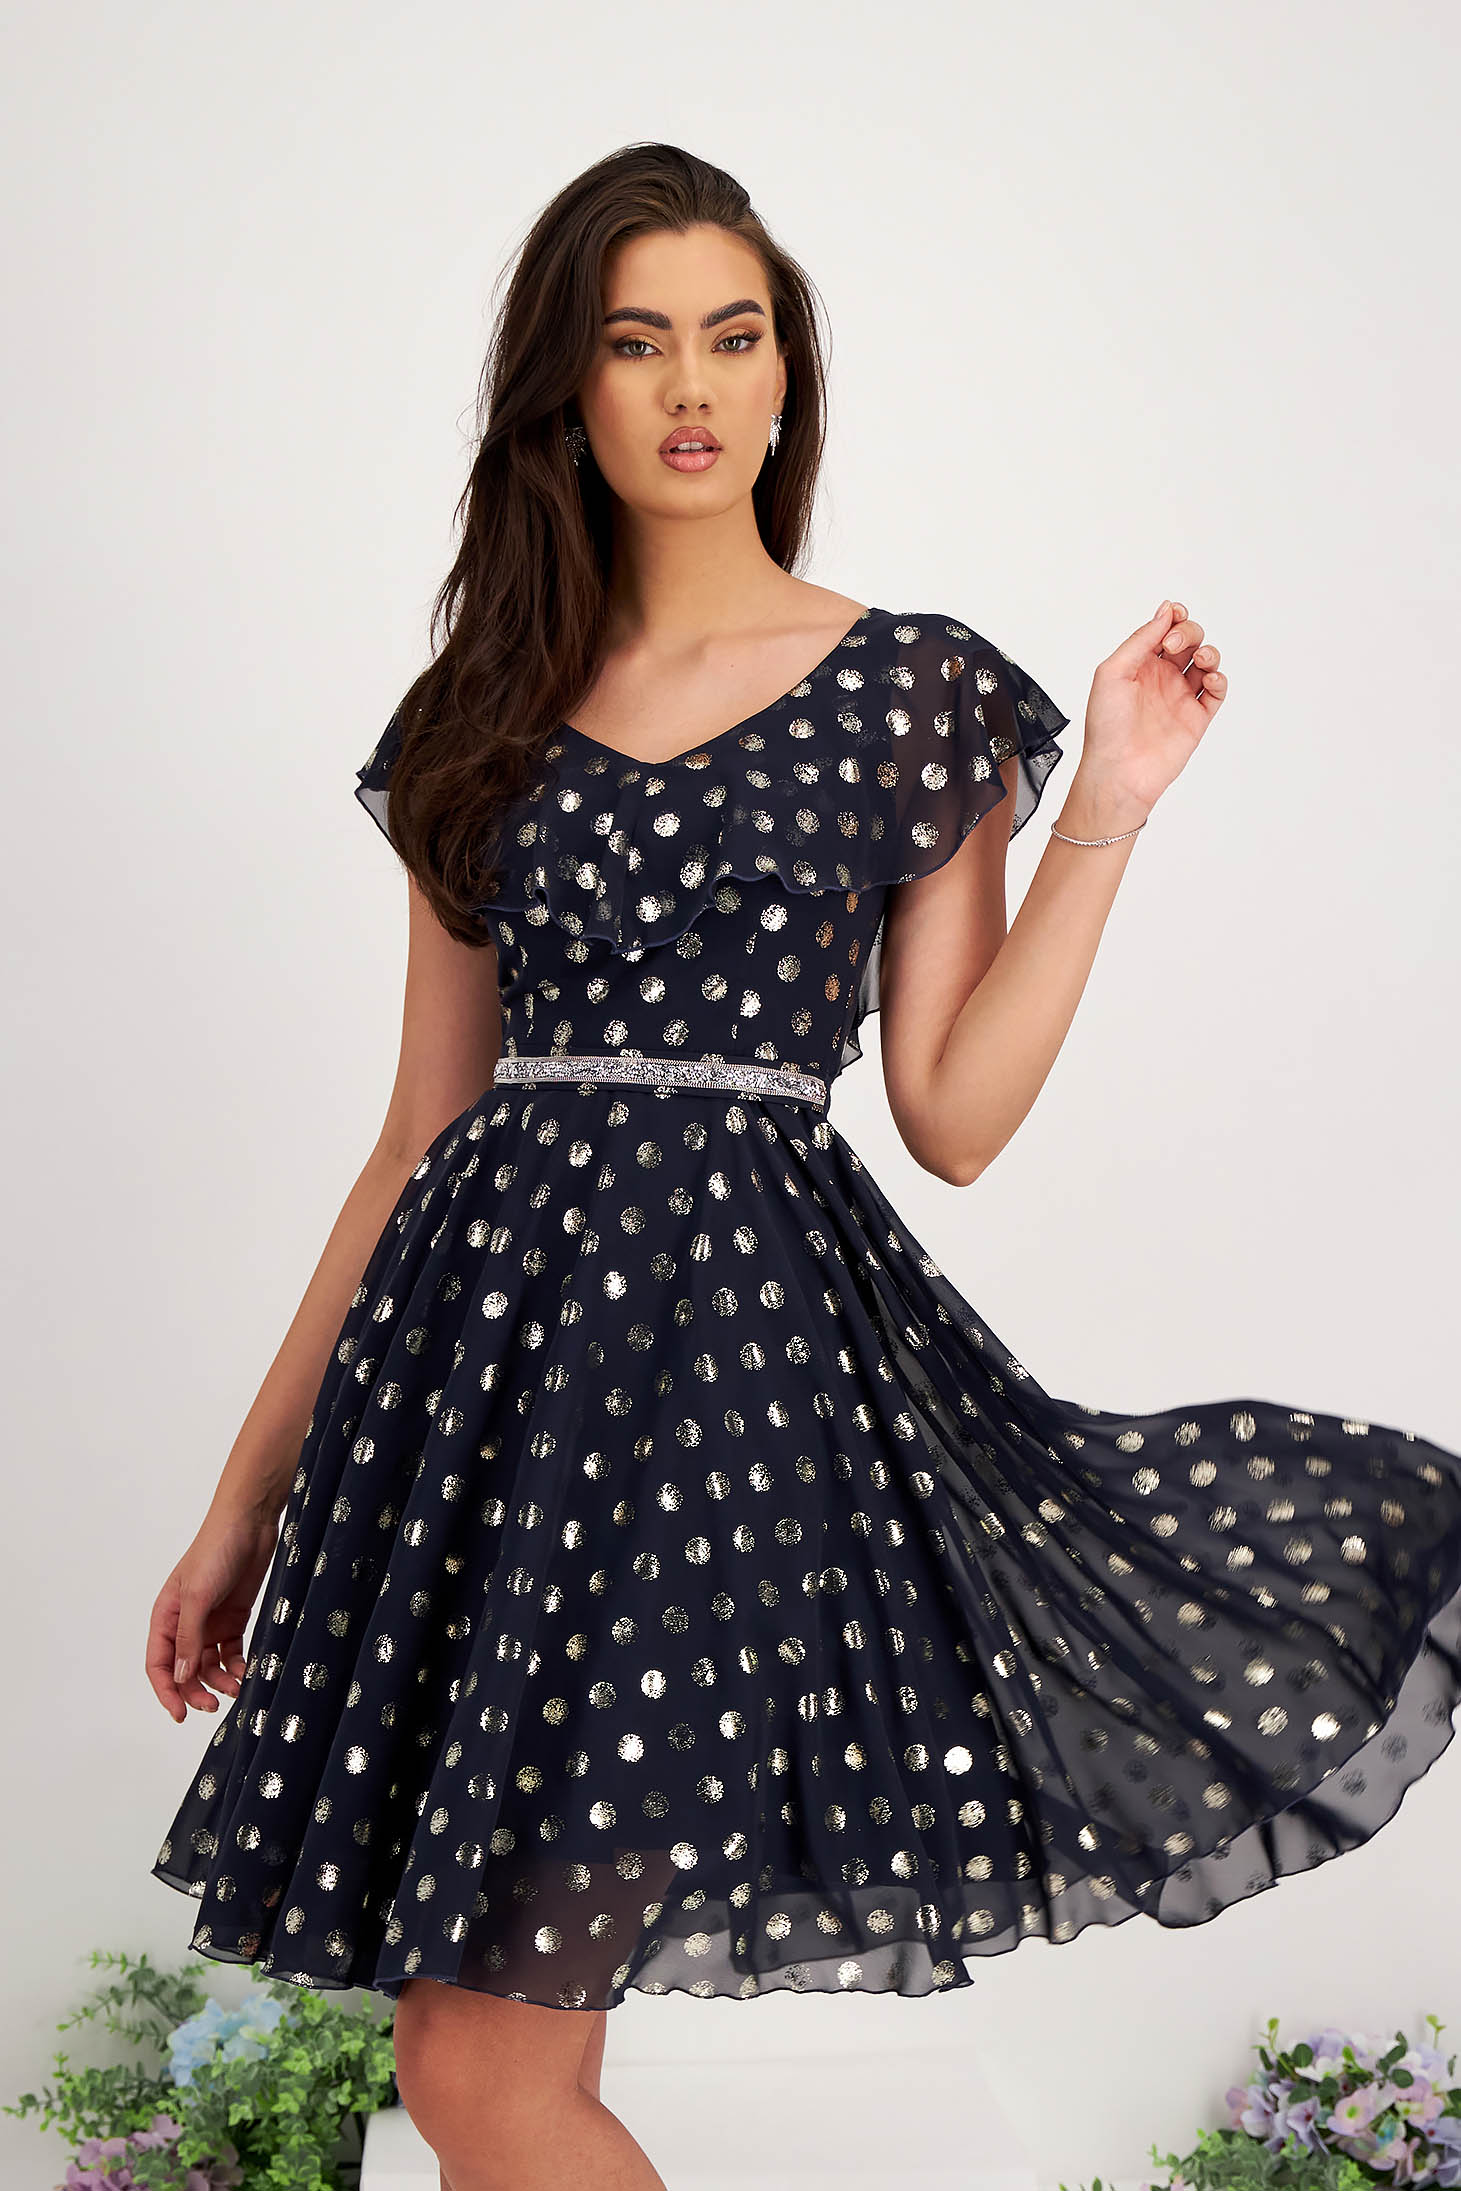 - StarShinerS dress cloche midi soft fabric with ruffle details